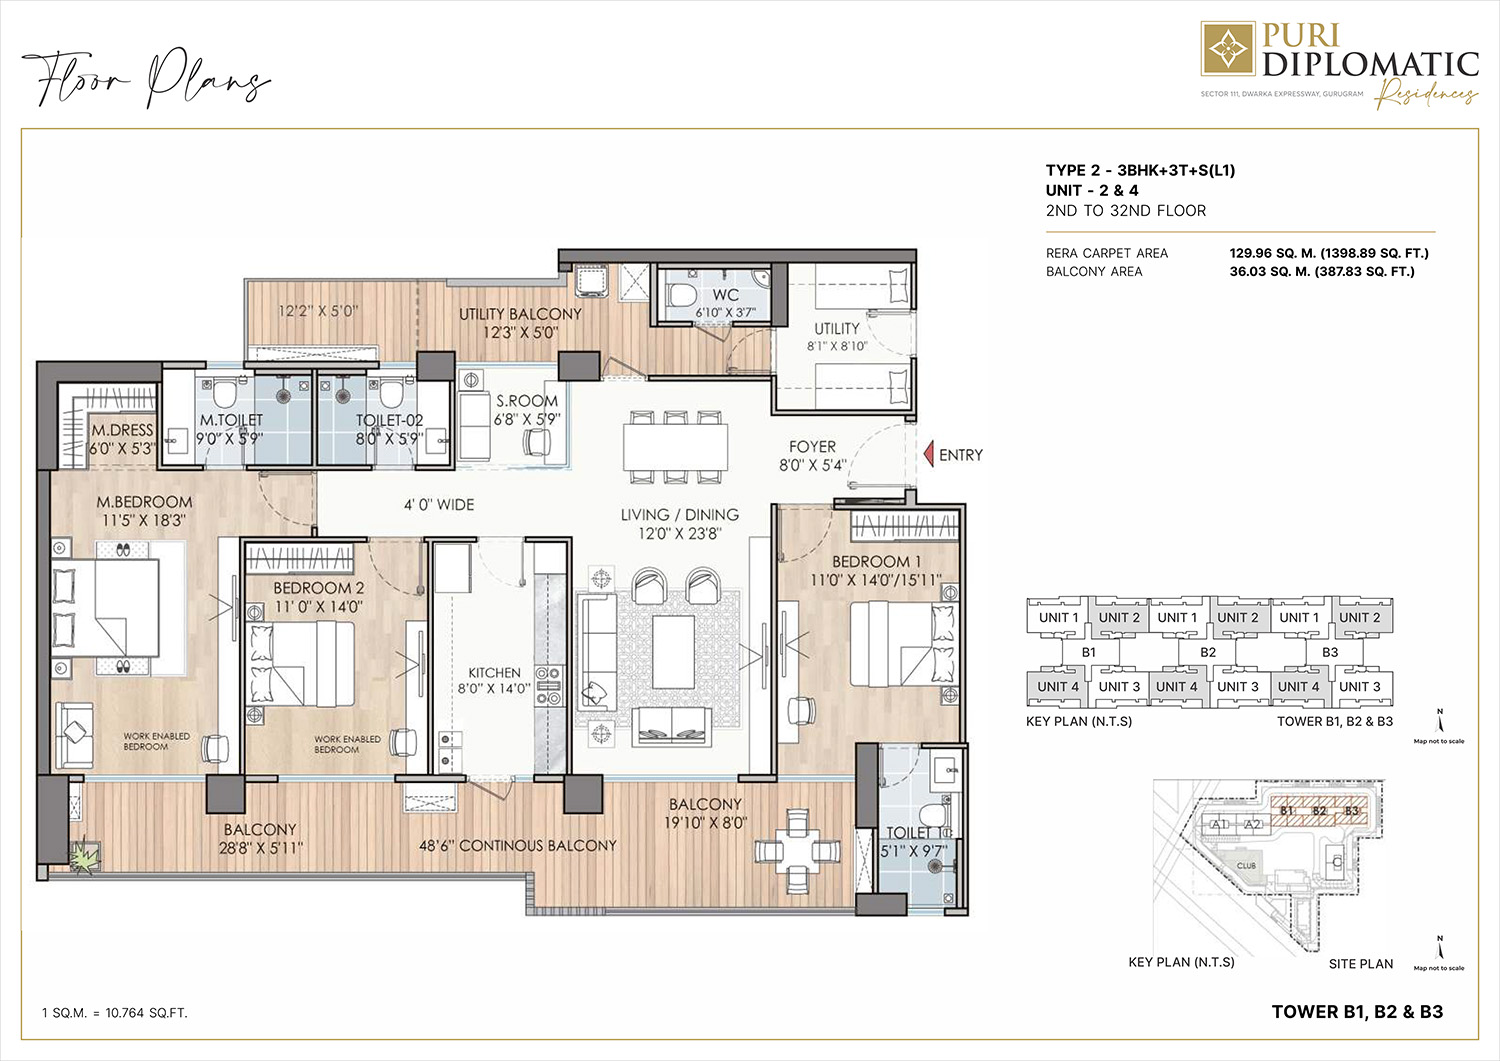 Puri Diplomatic Residences Floor Plan